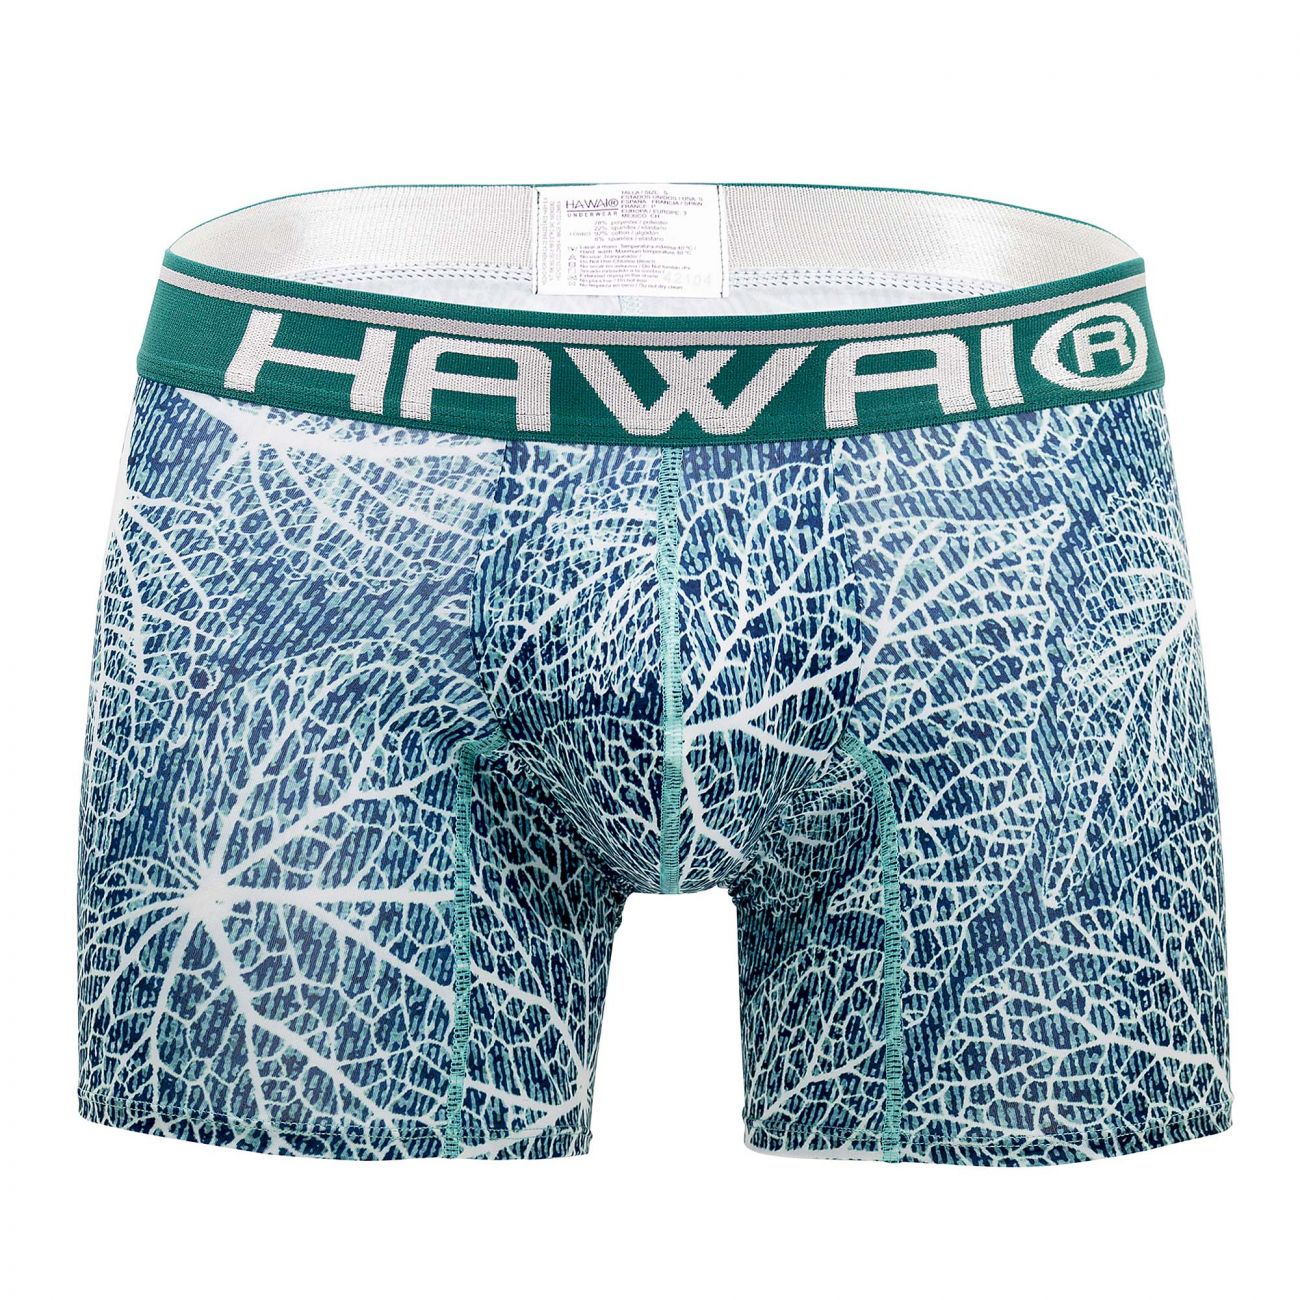 HAWAI 42104 Printed Boxer Briefs Green